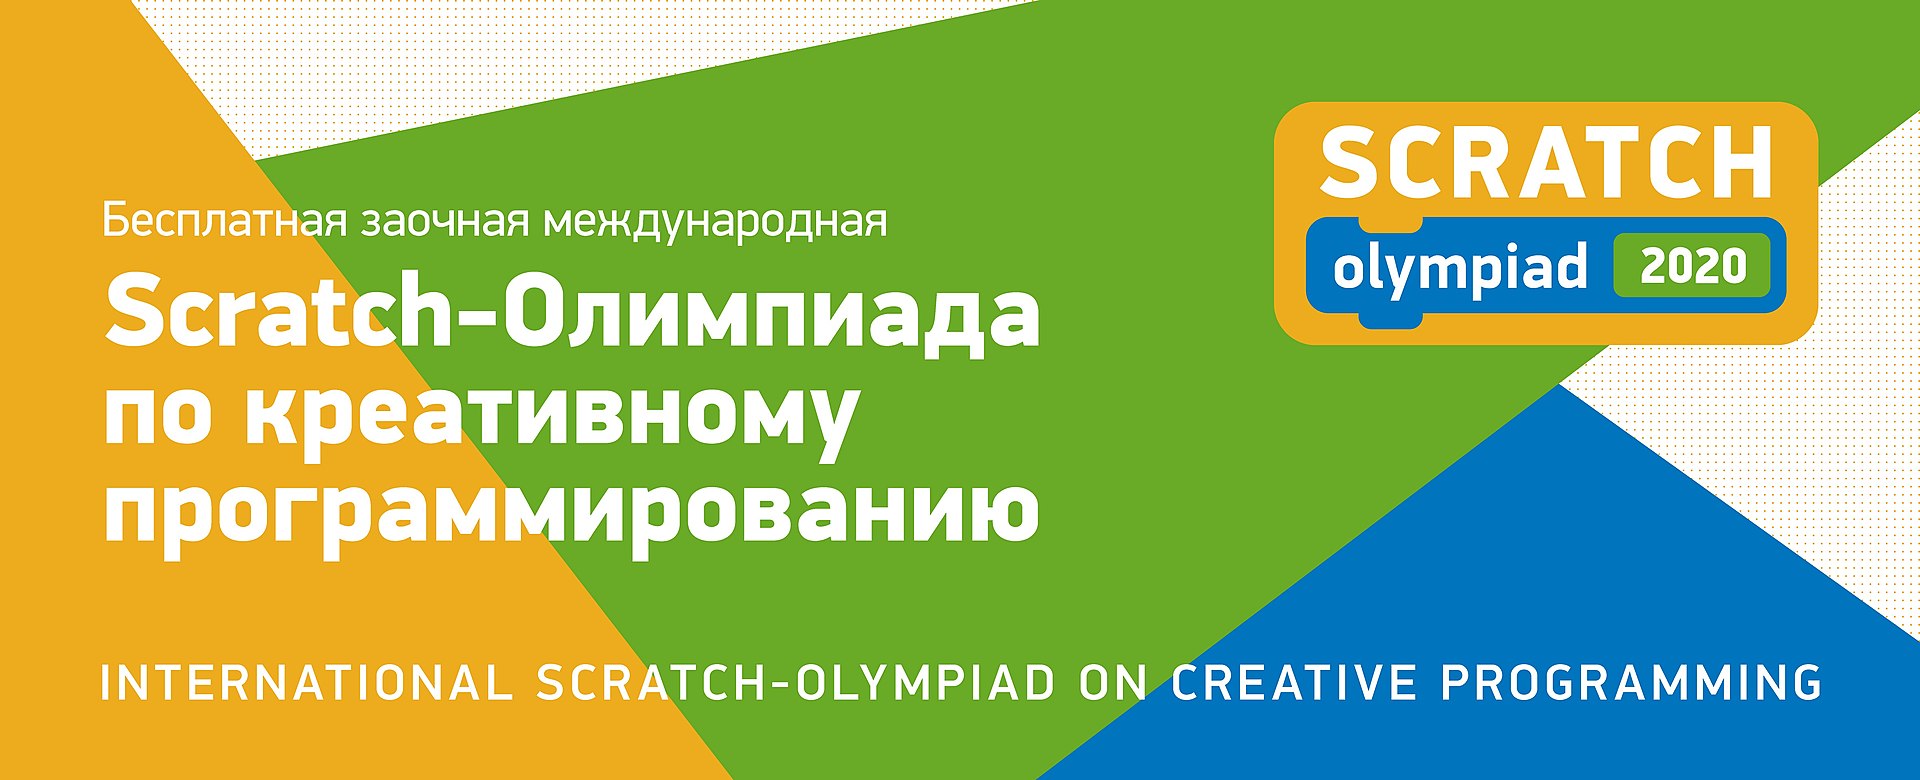 Стартует Международная олимпиада по креативному программированию